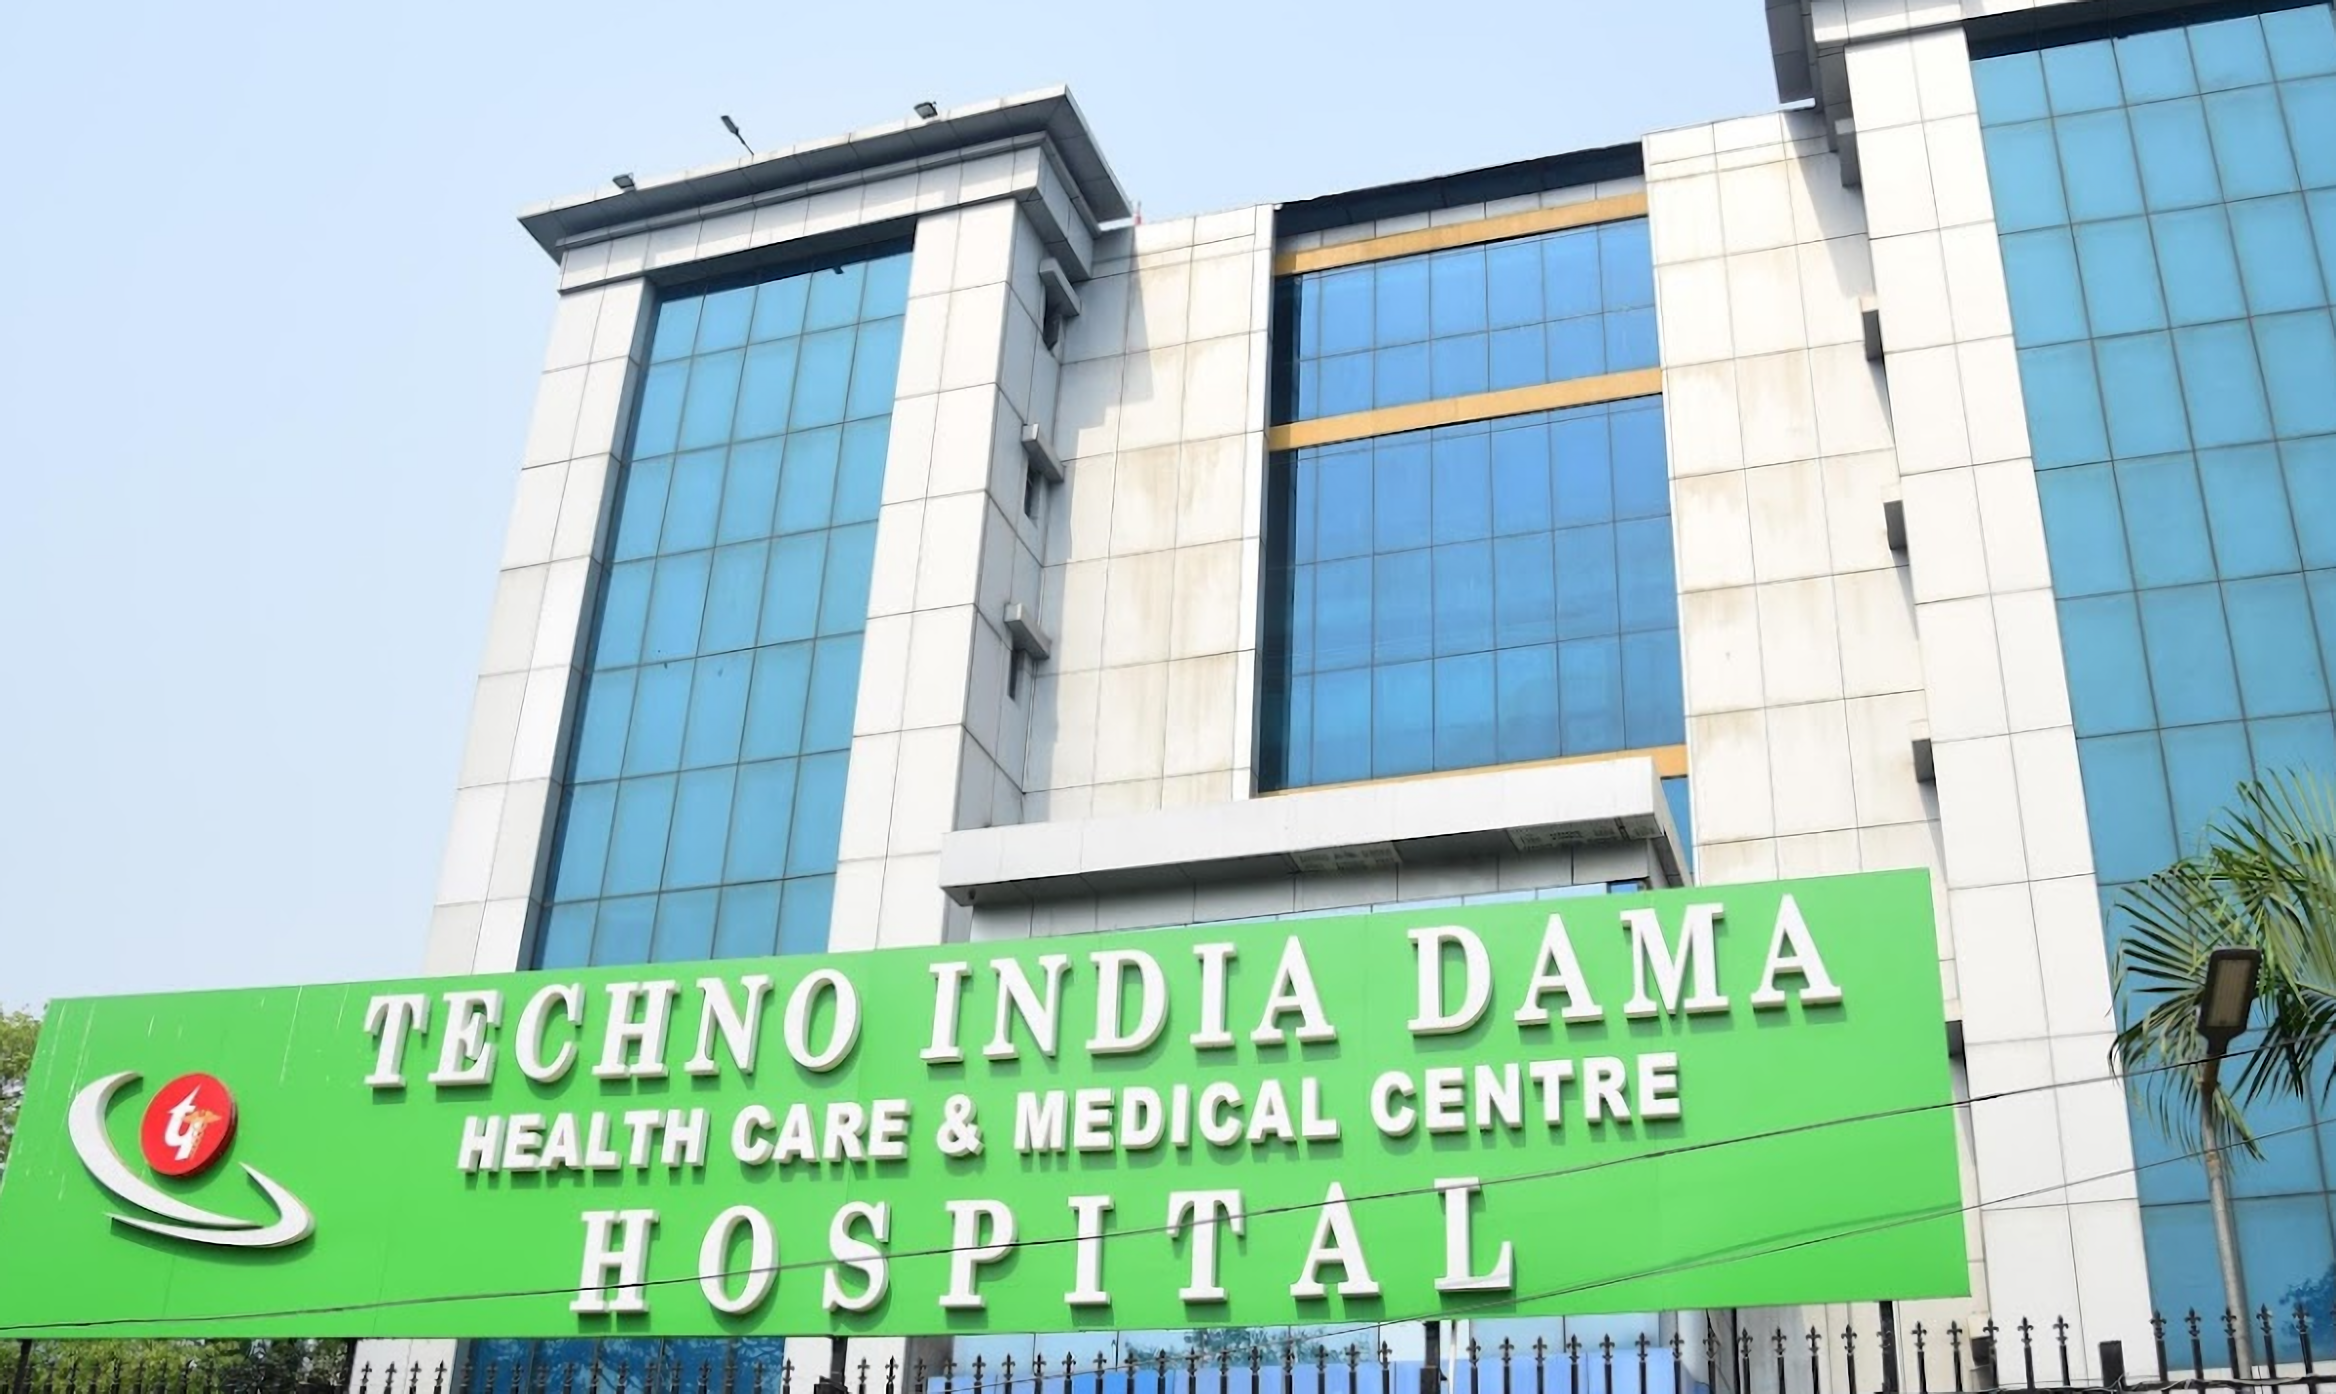 Techno India Dama Healthcare And Medical Research Centre photo